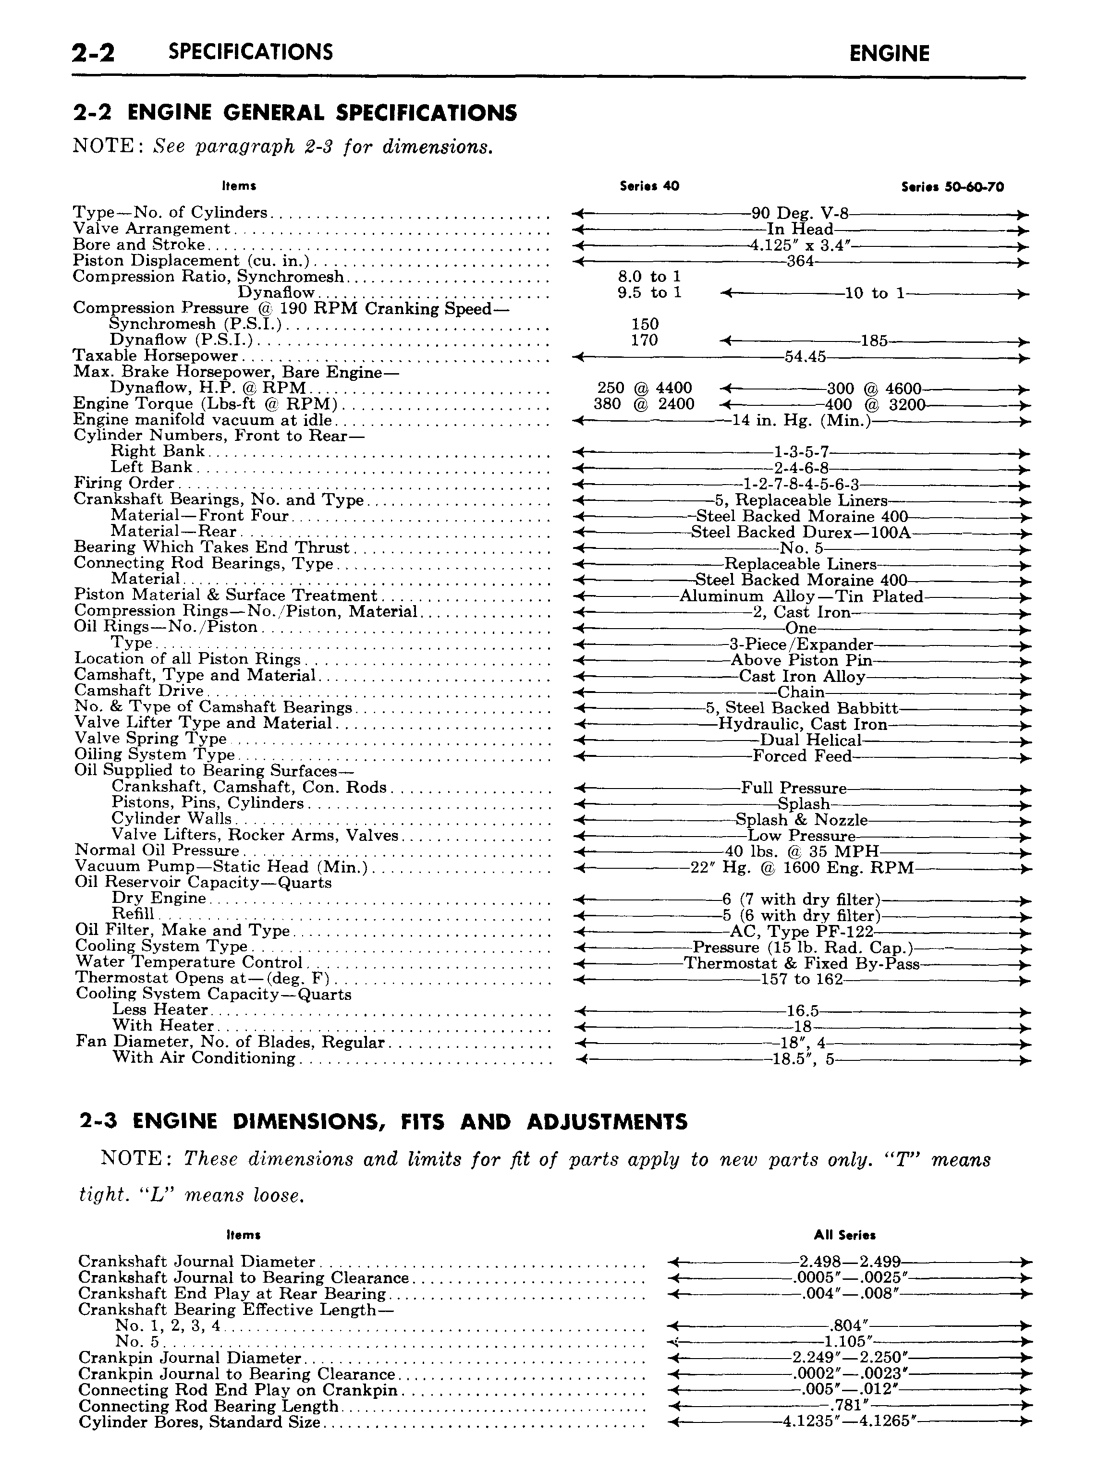 n_03 1957 Buick Shop Manual - Engine-002-002.jpg